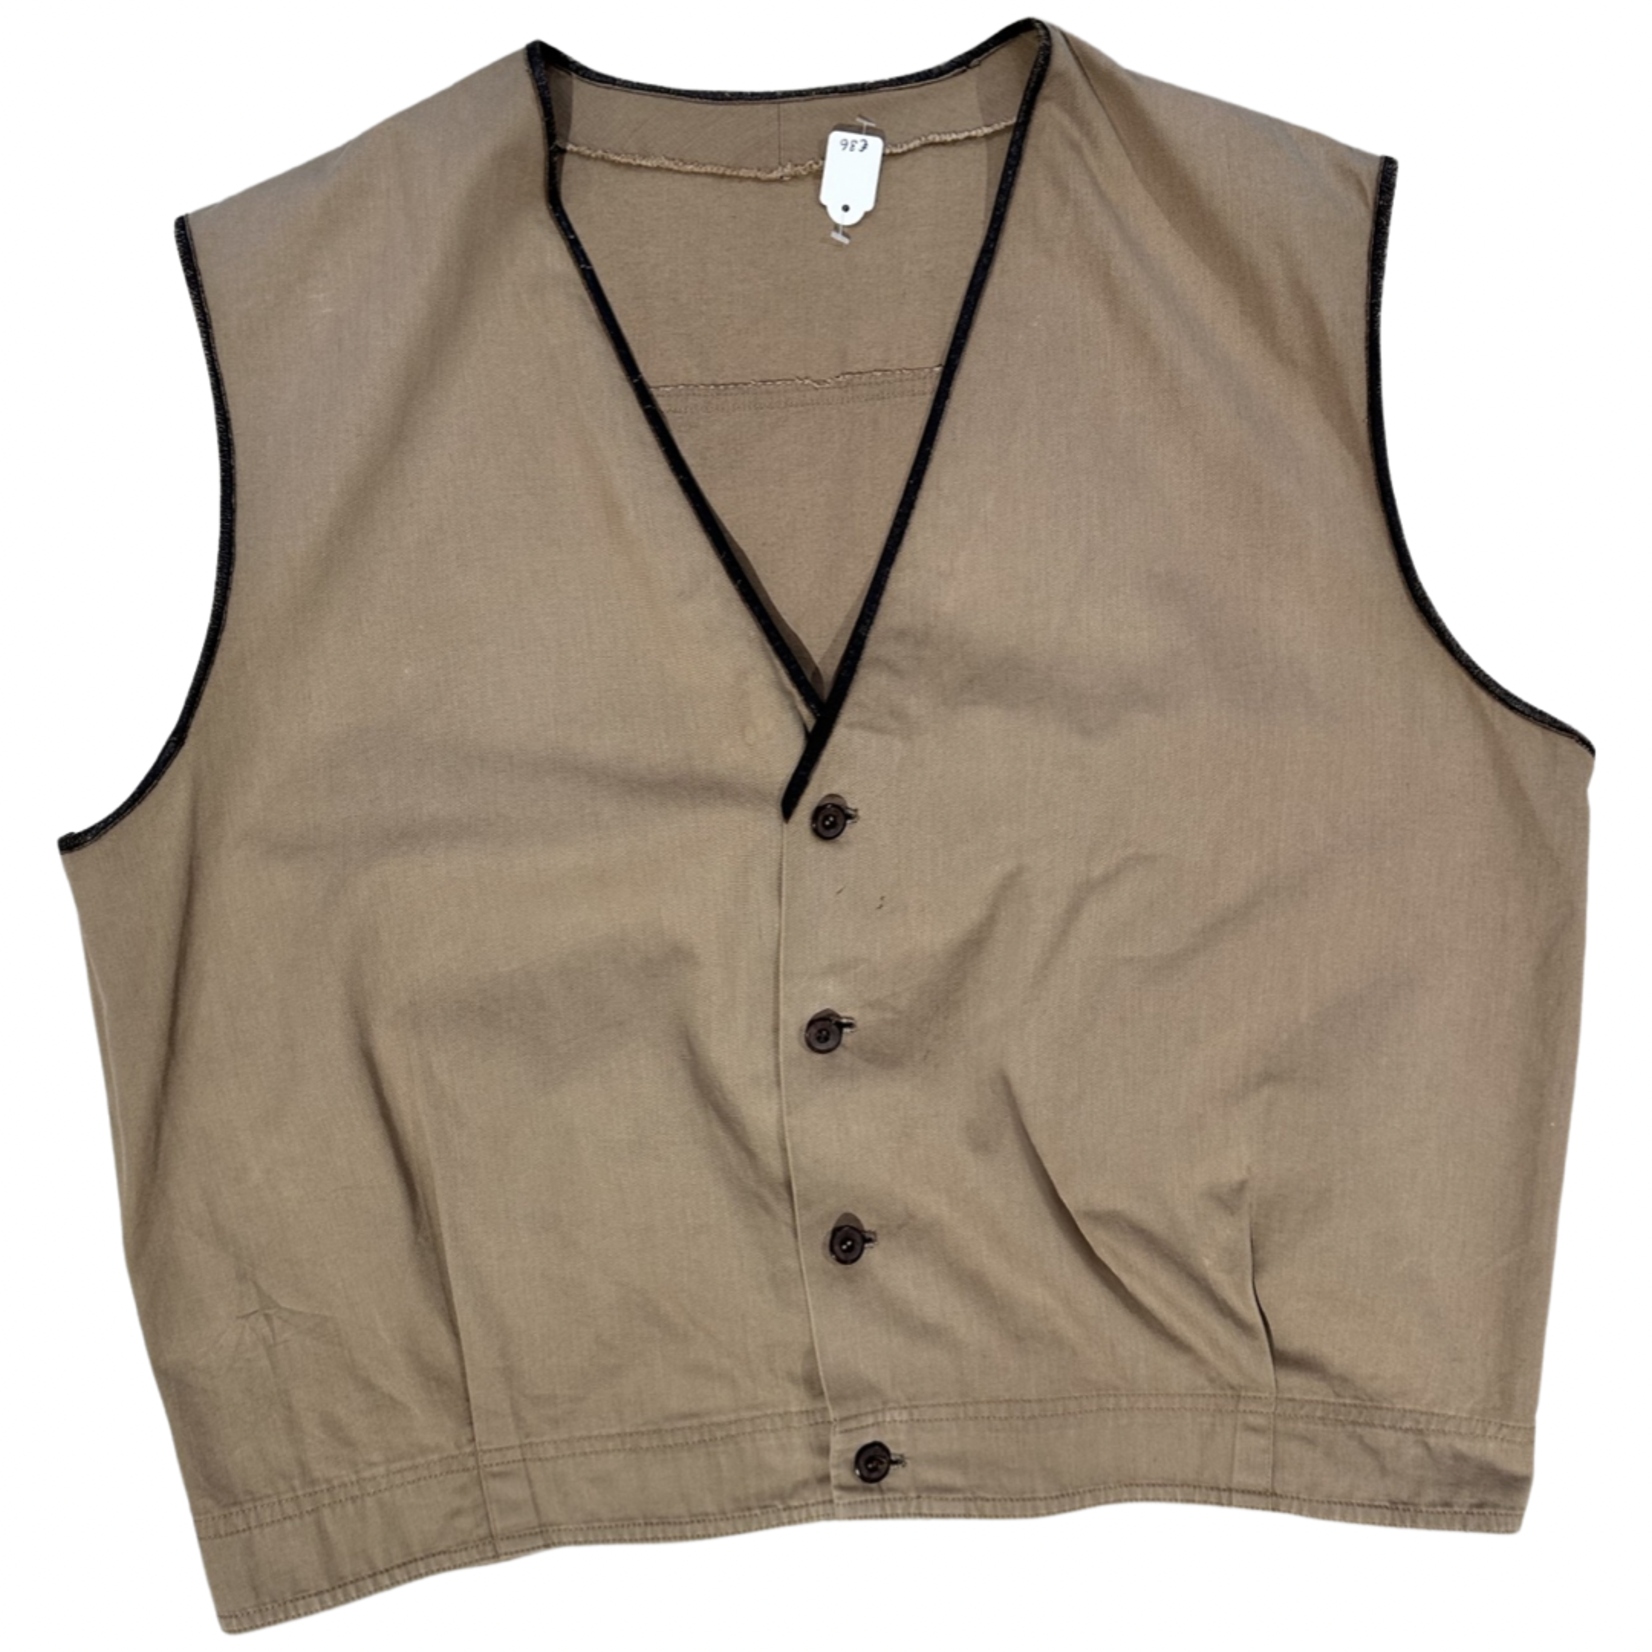 Vintage Vintage waist coat minimal size XL